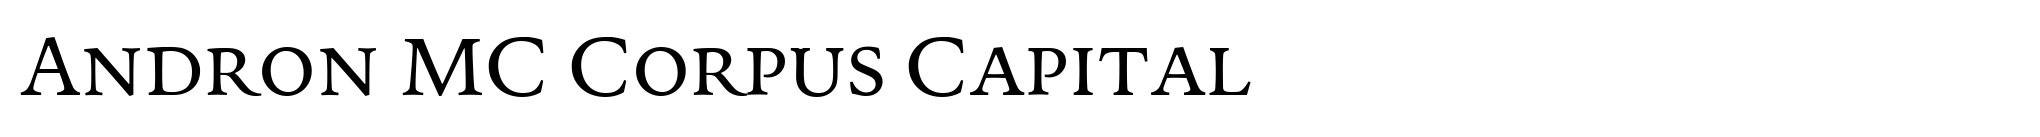 Andron MC Corpus Capital image